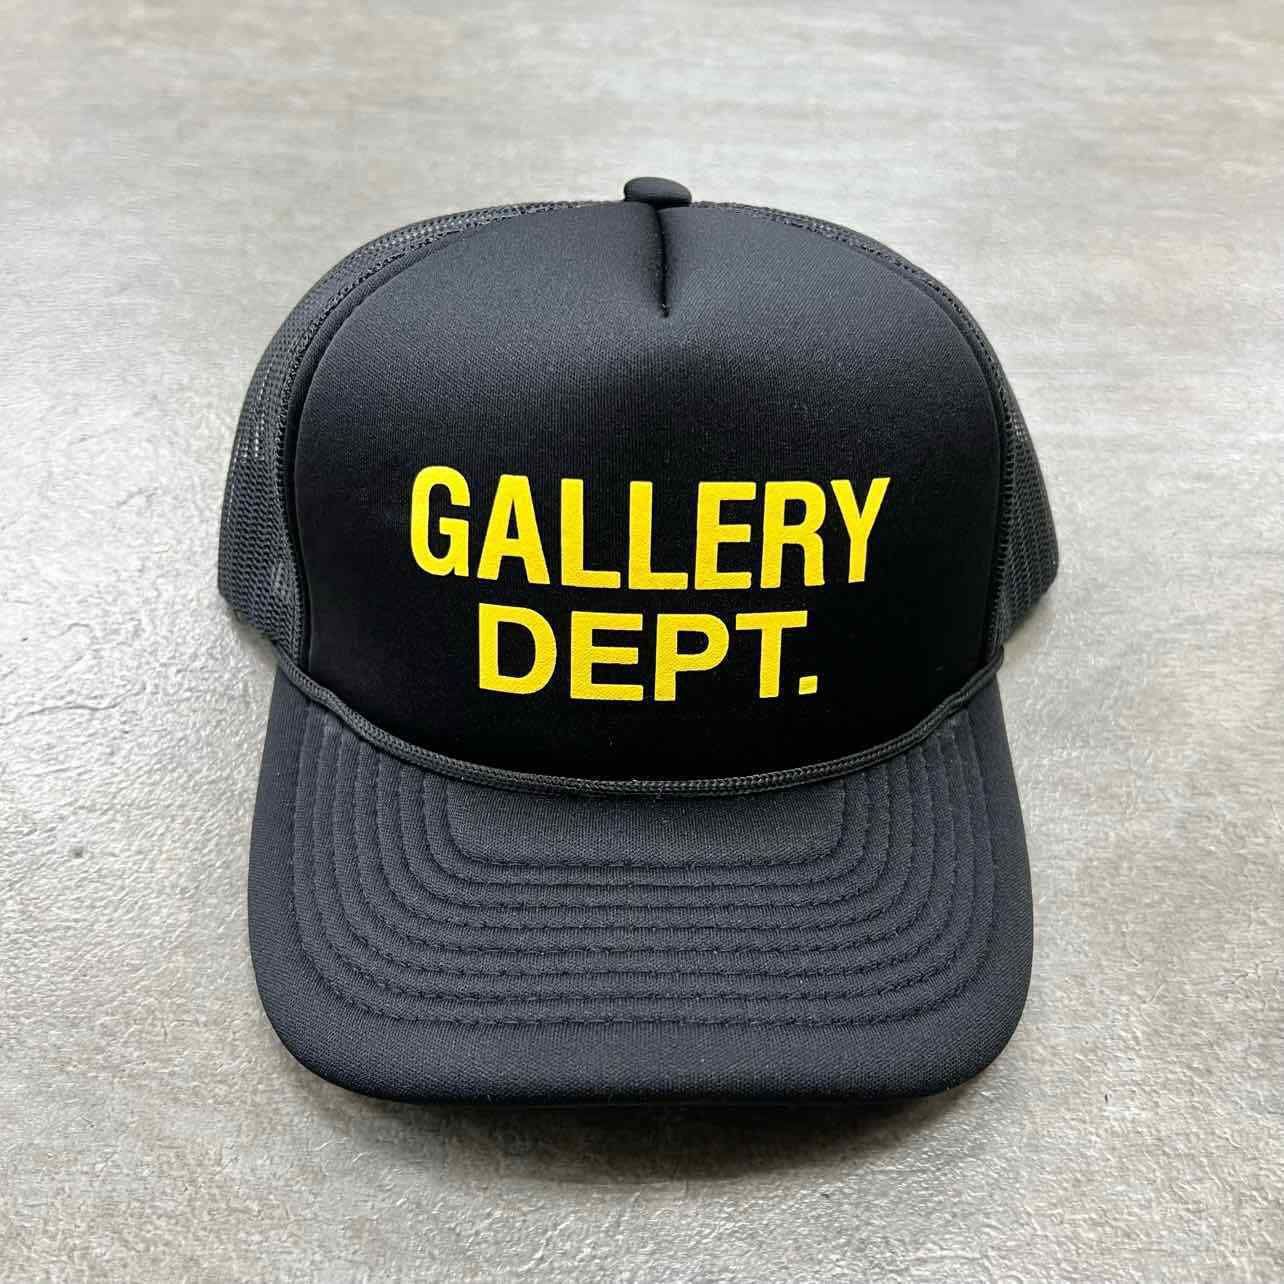 Black Gallery Dept Hat